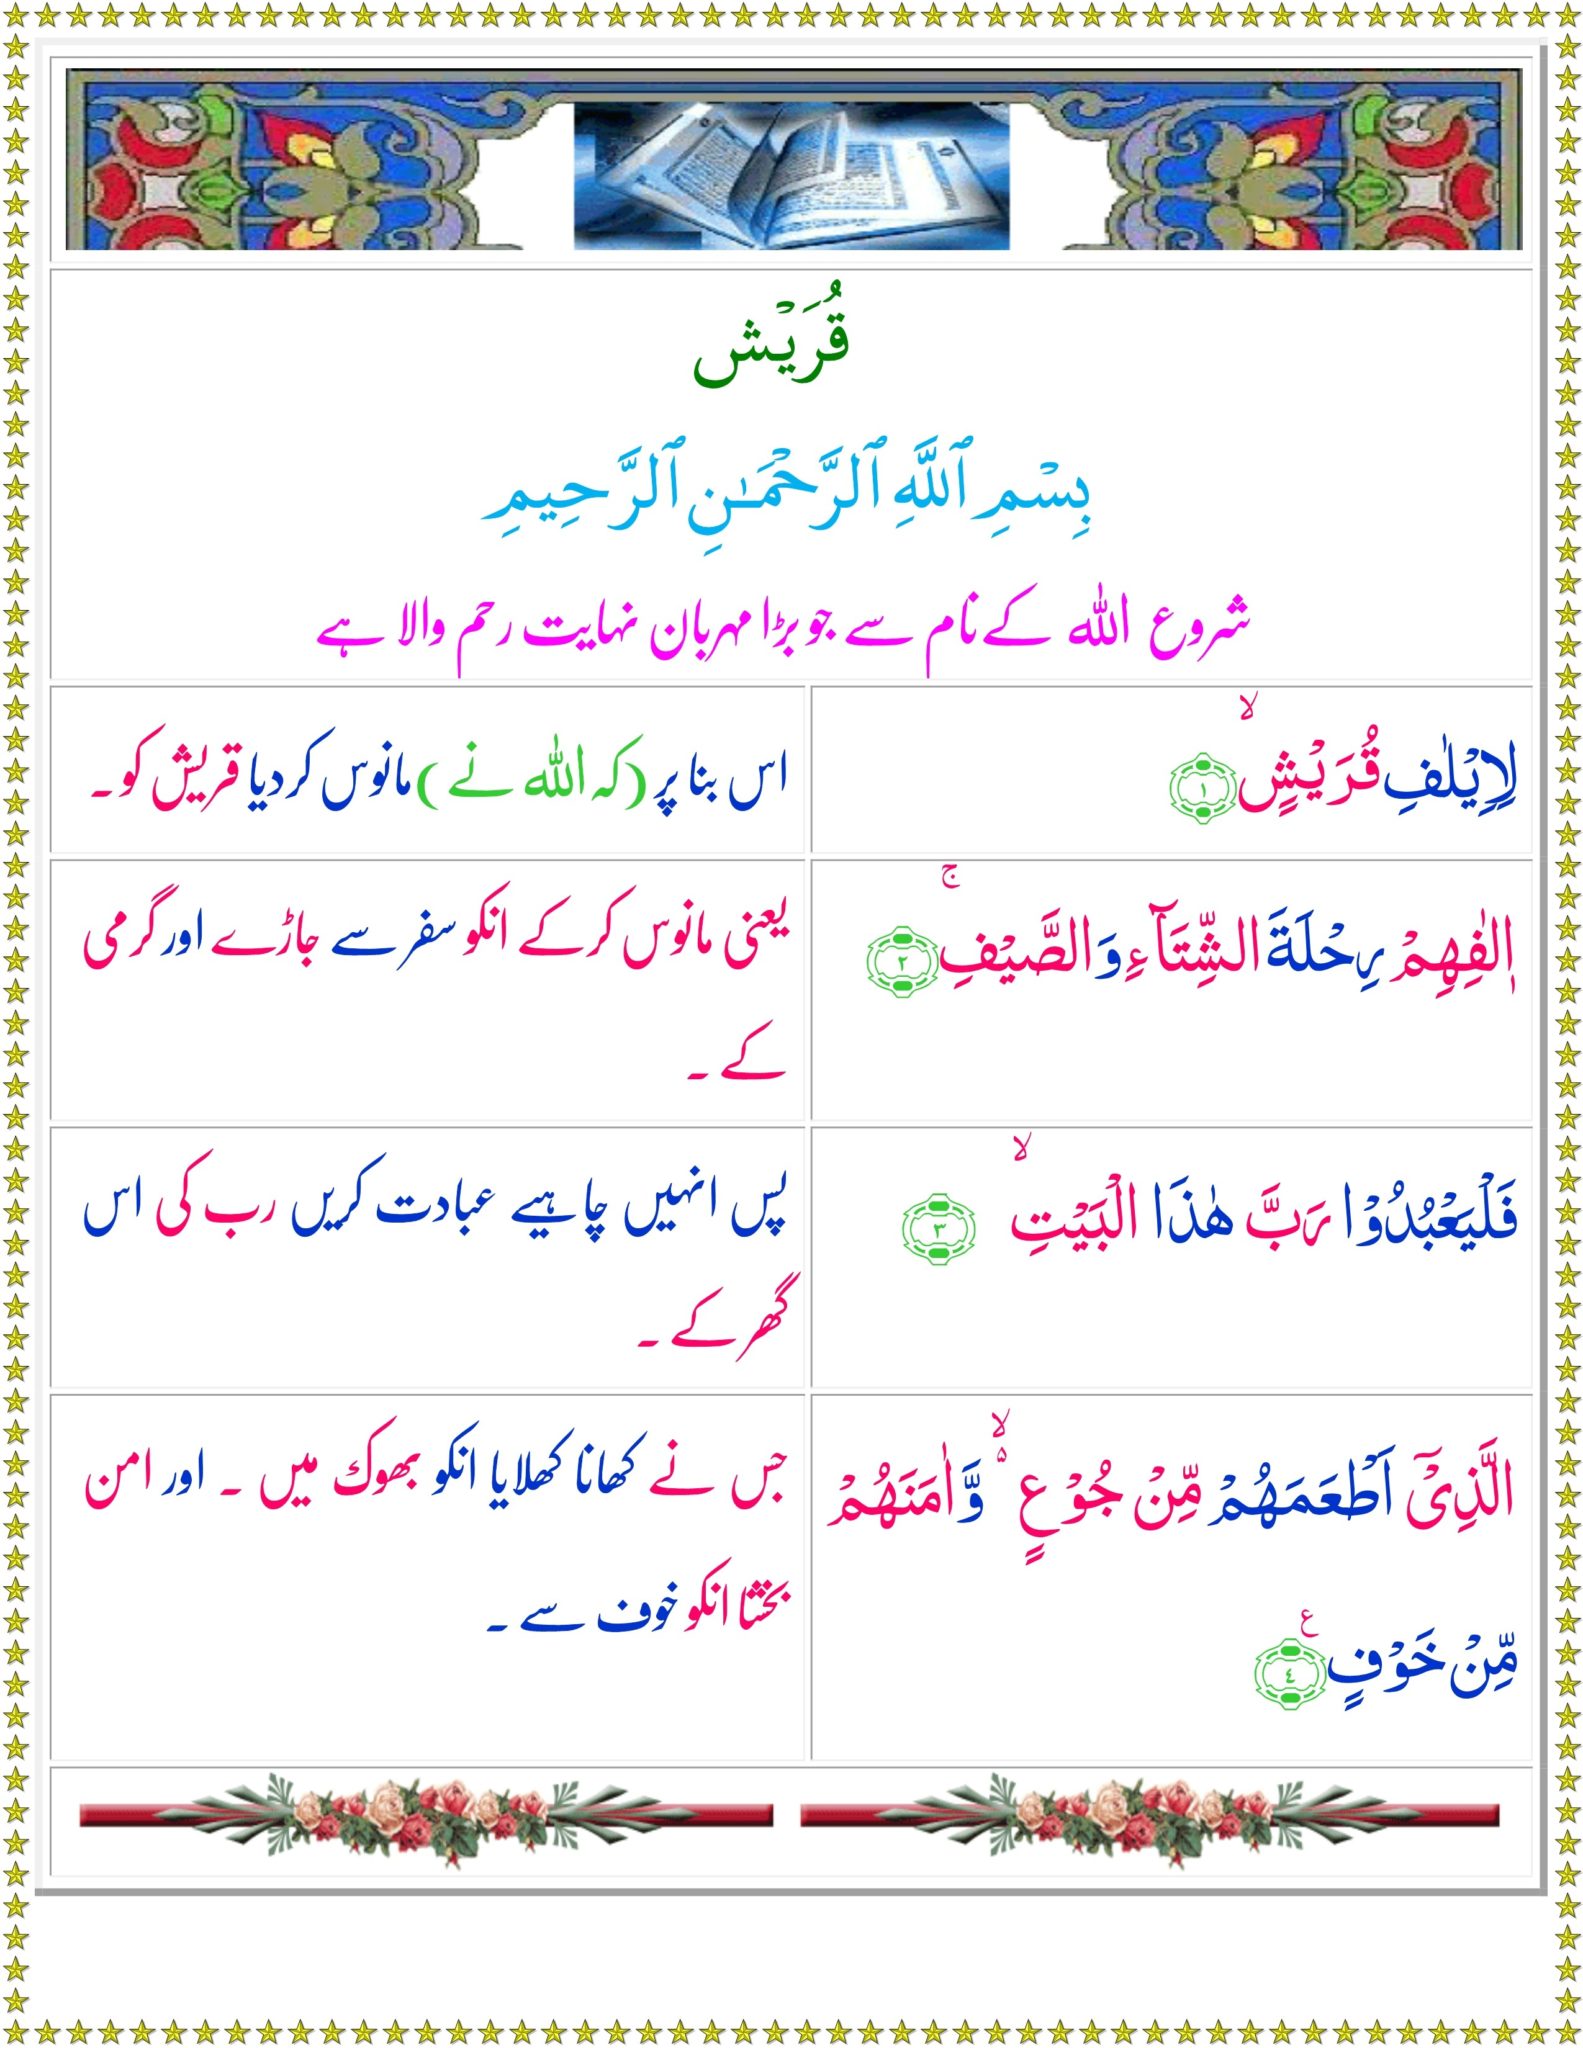 Surah Quraish translation in Urdu, Hindi